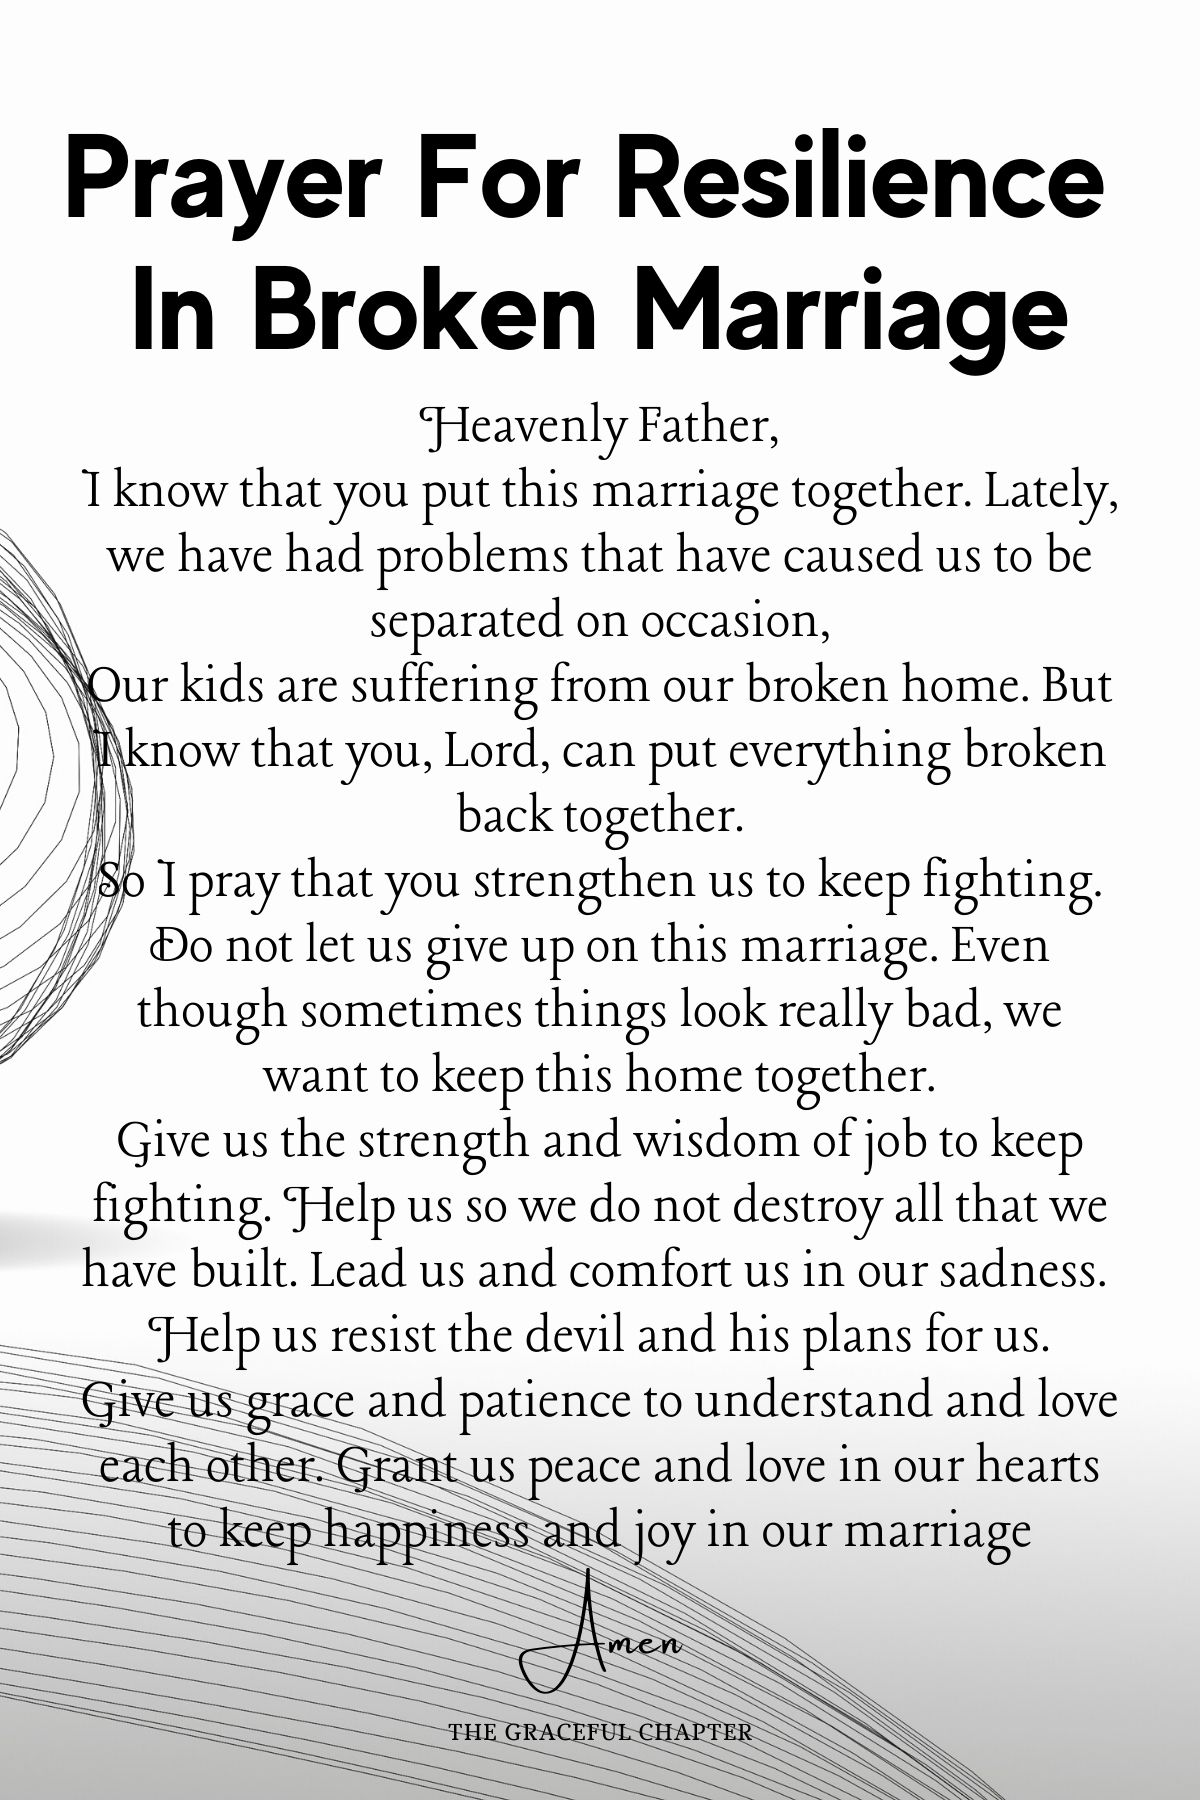 Resilience in broken marriage